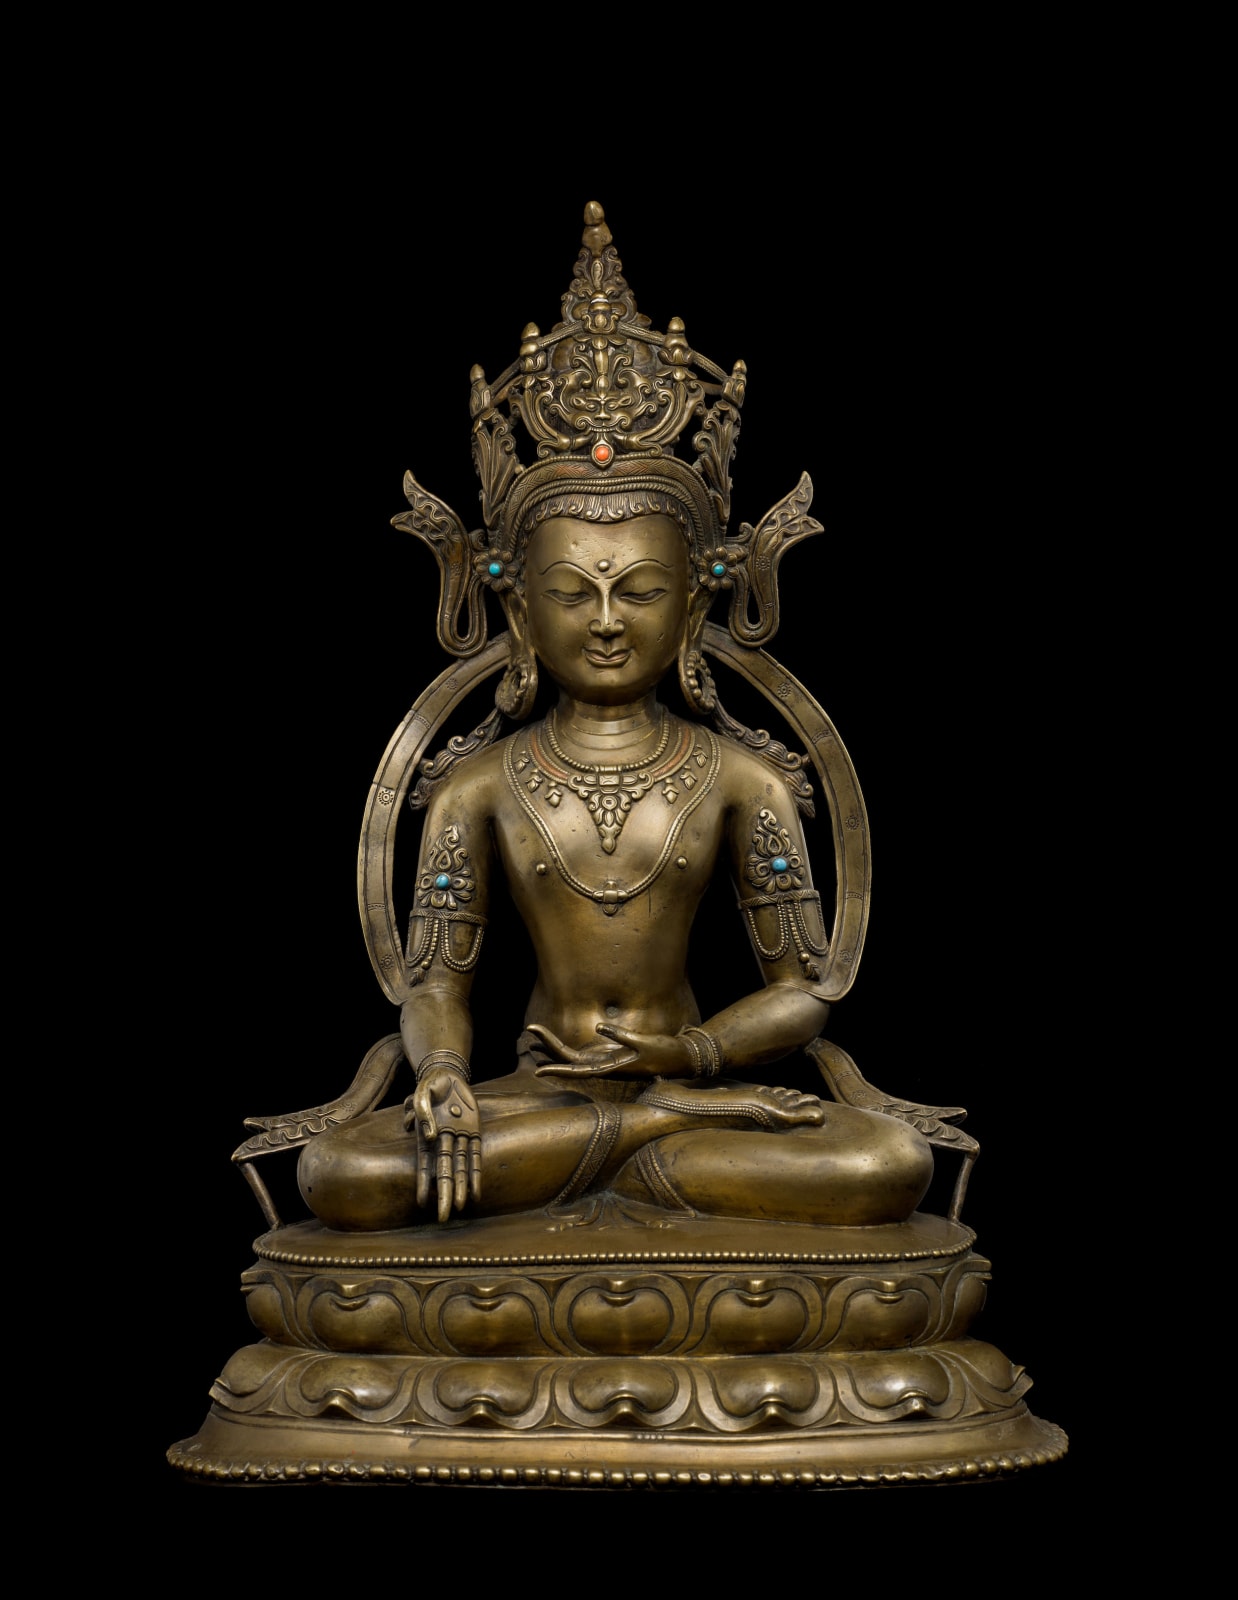 Western Tibetan 14th century bronze sculpture of Ratnasambhava